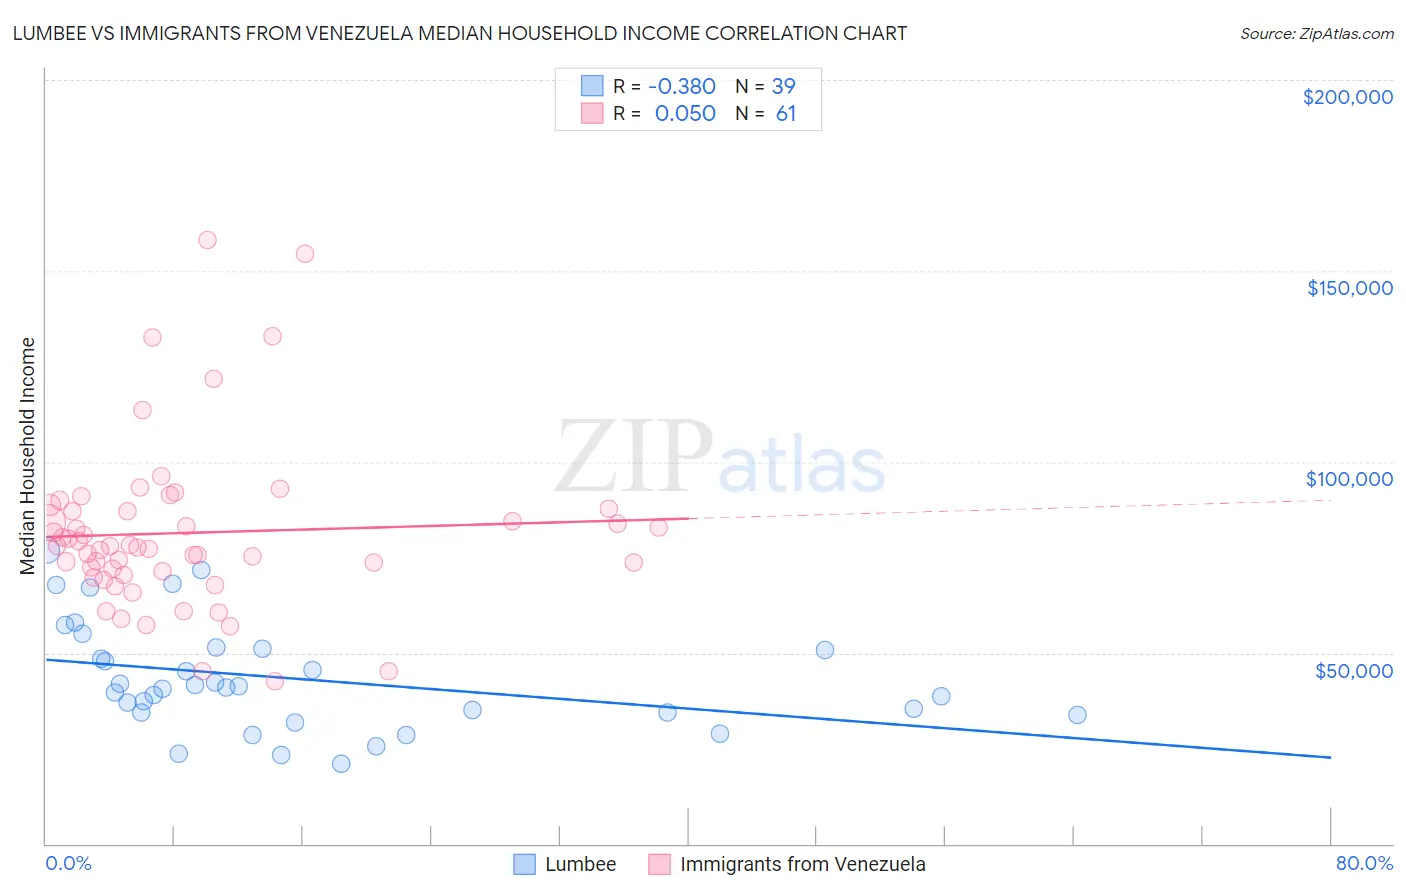 Lumbee vs Immigrants from Venezuela Median Household Income